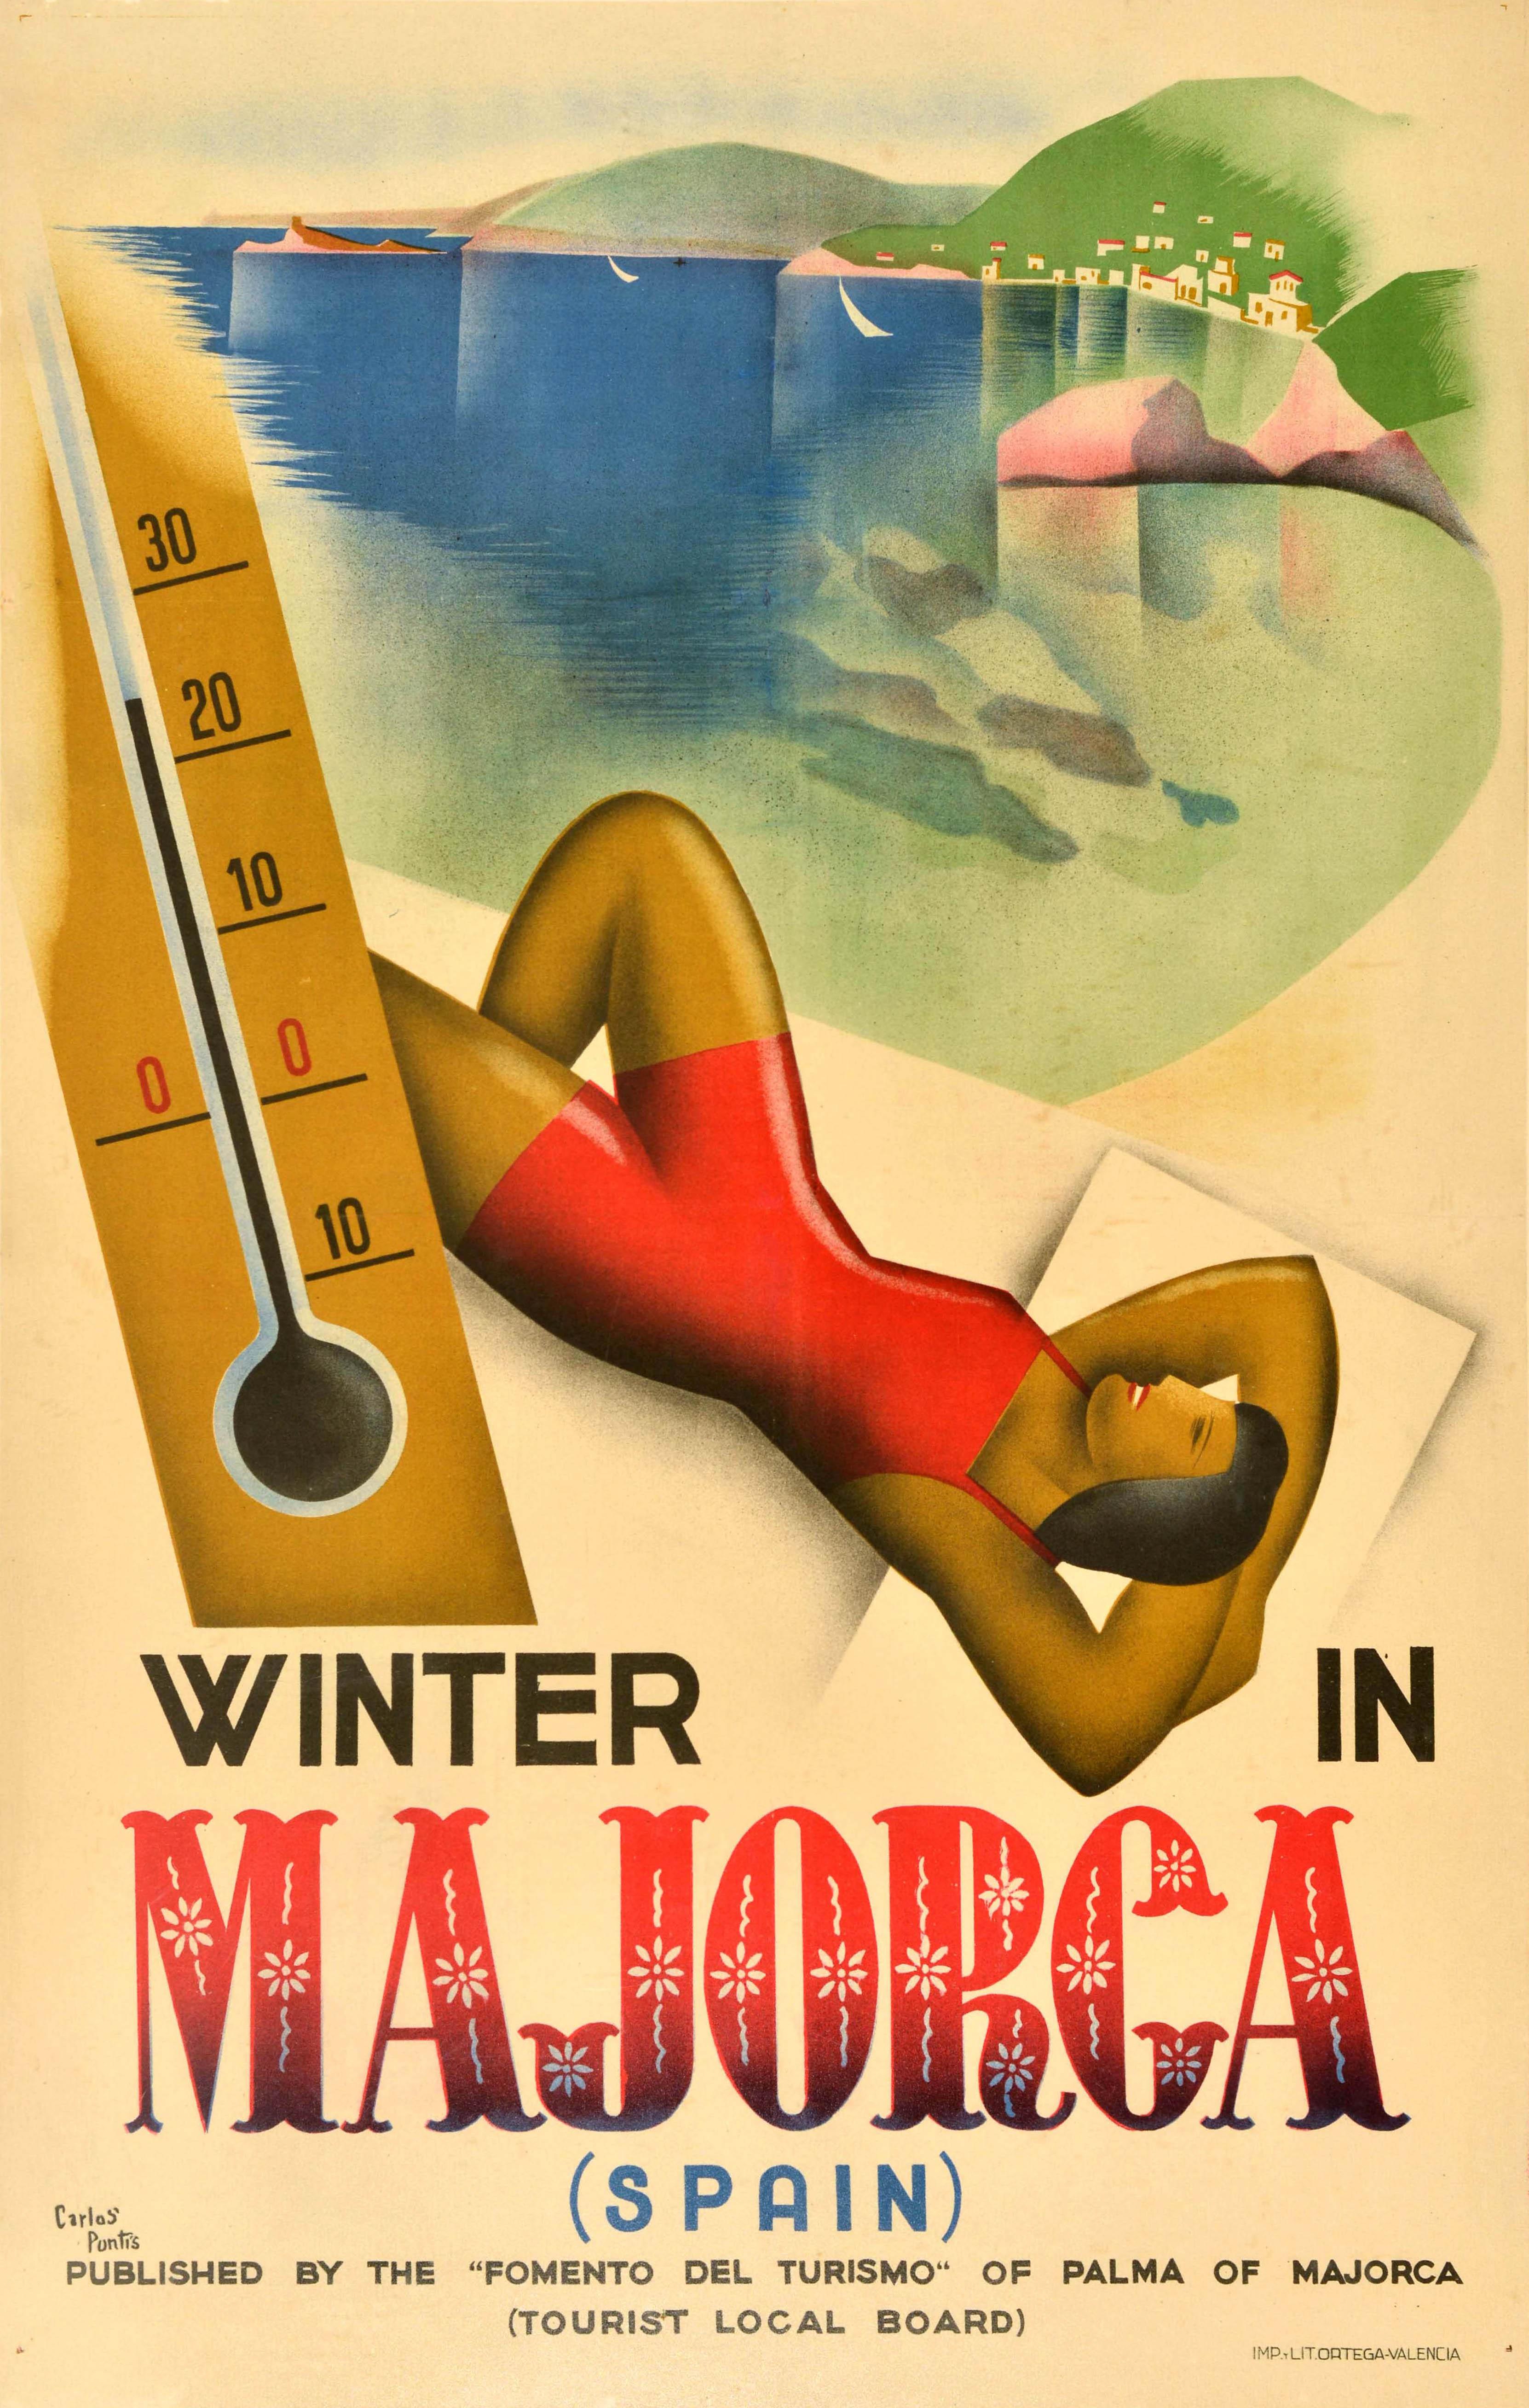 Carlos Puntis Nebot Print - Original Vintage Travel Poster Winter In Majorca Spain Carlos Puntis Art Deco